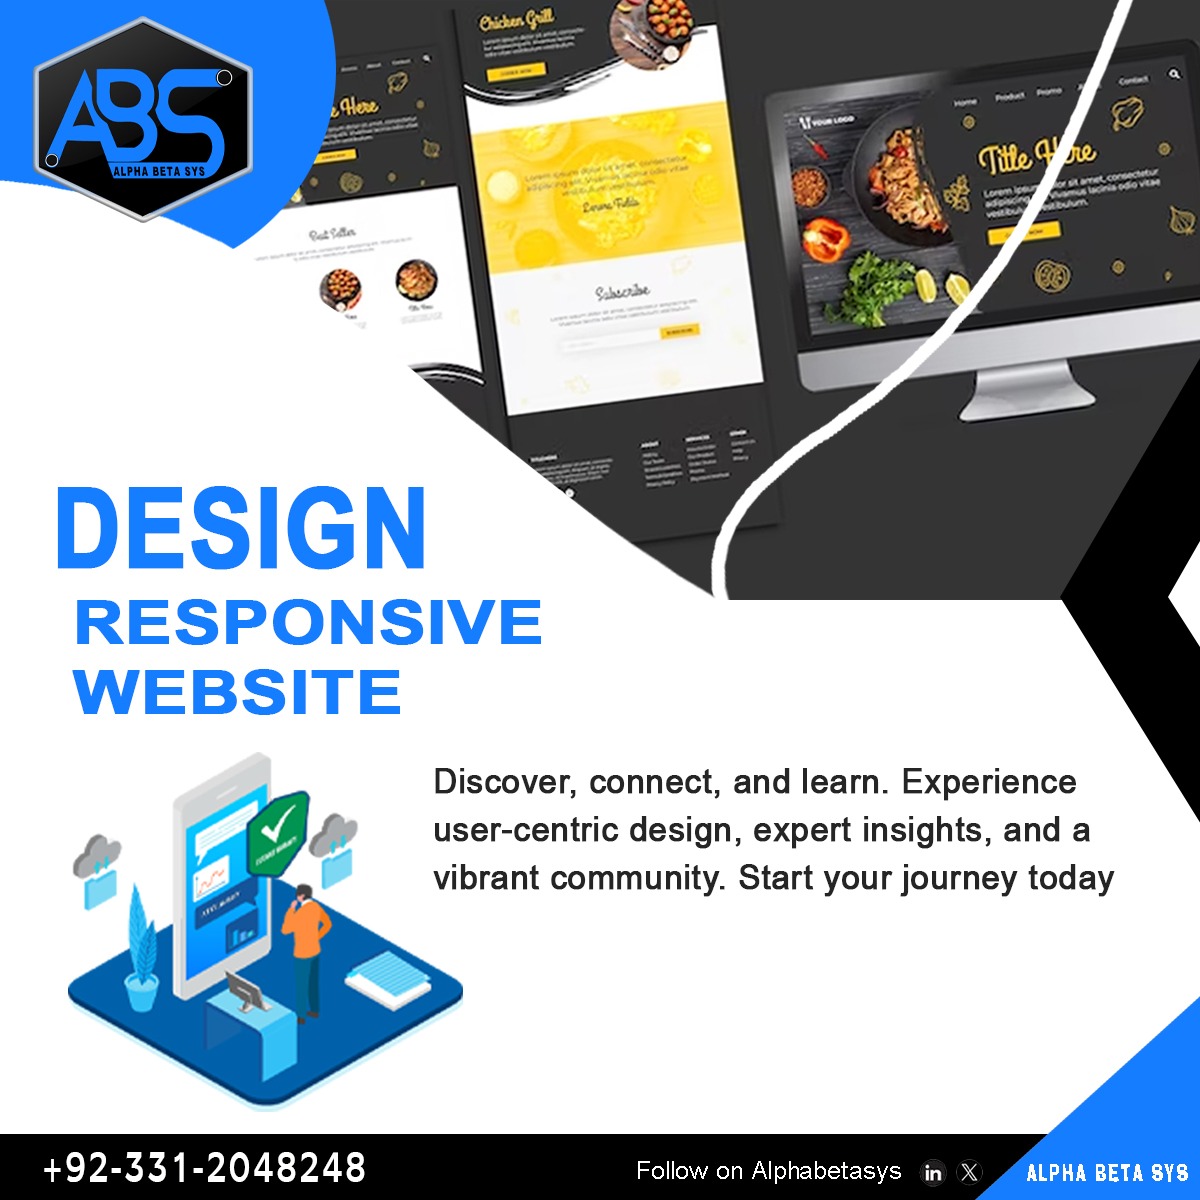 Is your website design old?

#Responsivewebsite #newdesign #landingpage 
#dynamic #Webdesign #WebsiteDevelopment #onlinebusiness #WordPress #ecommerce #Wix #Shopify #javascript #html5 #CSS